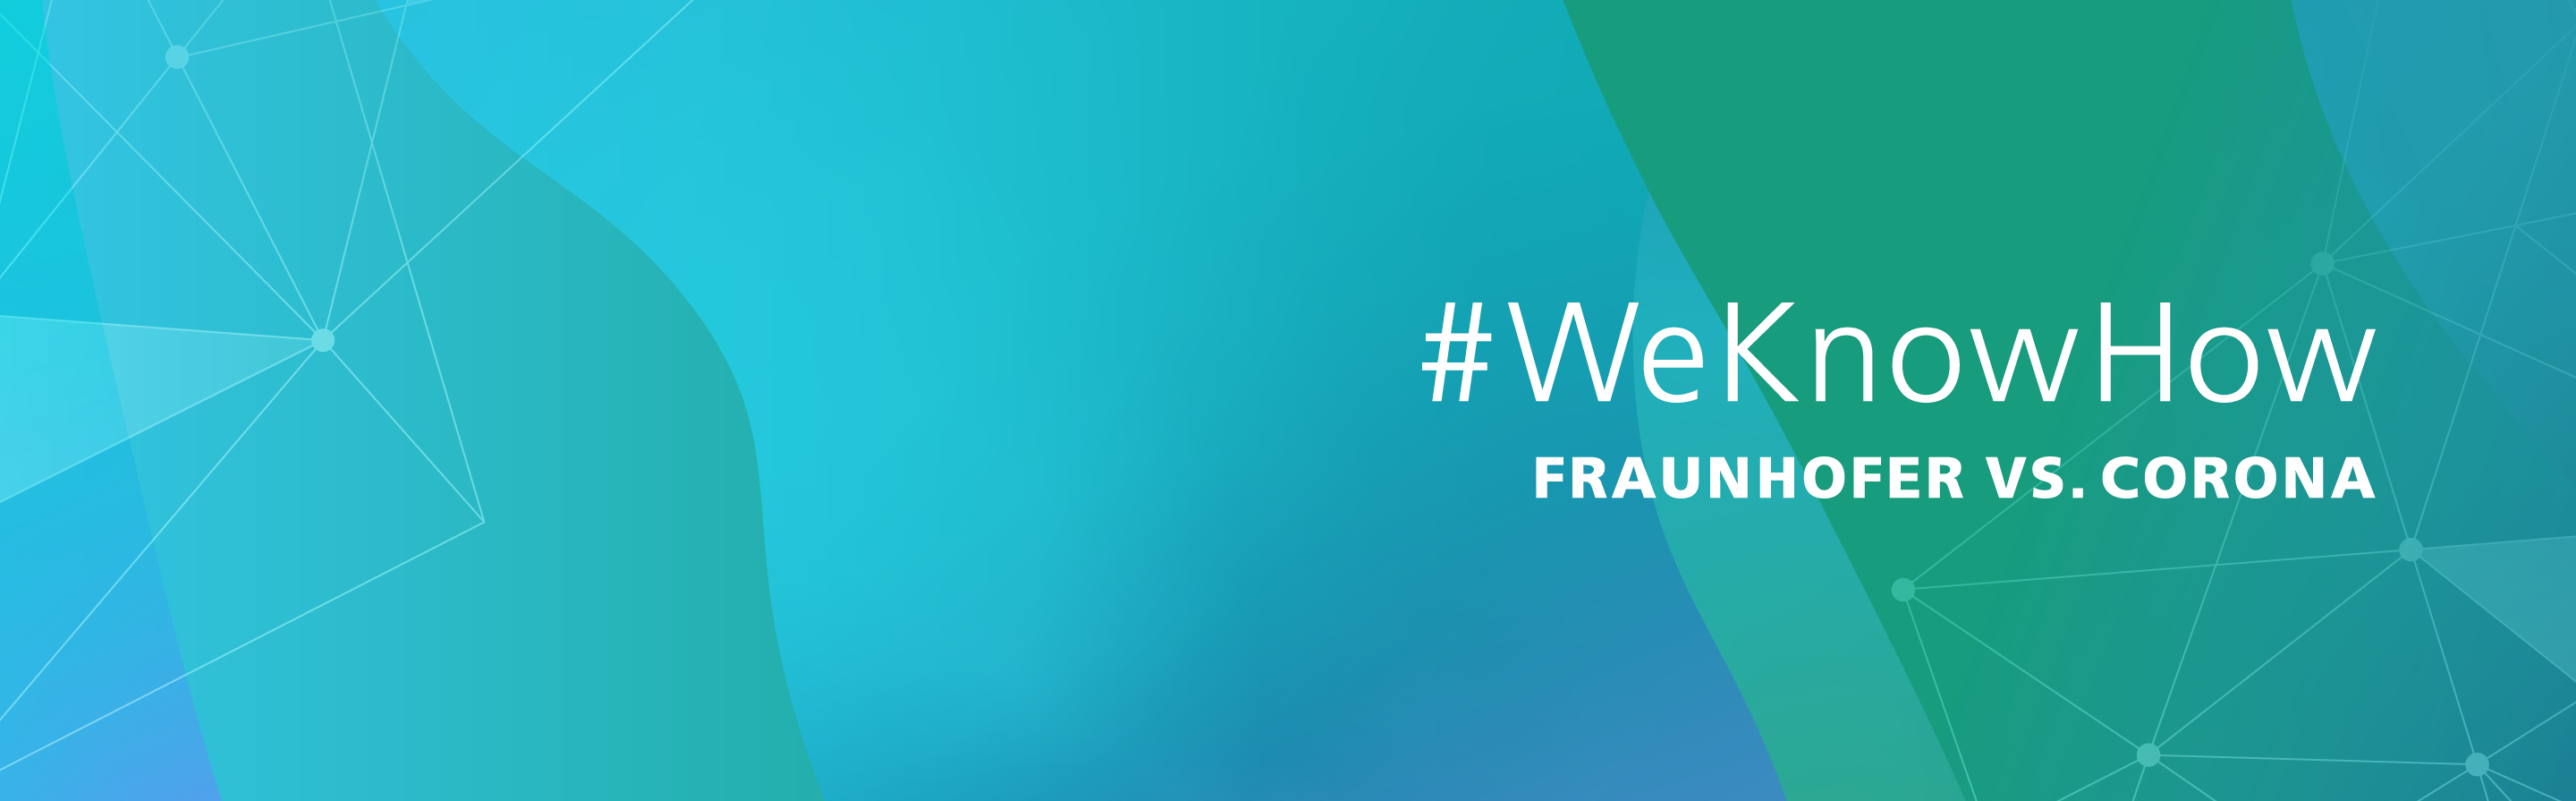 Logo Fraunhofer vs Corona #WeKnowHow Campaign